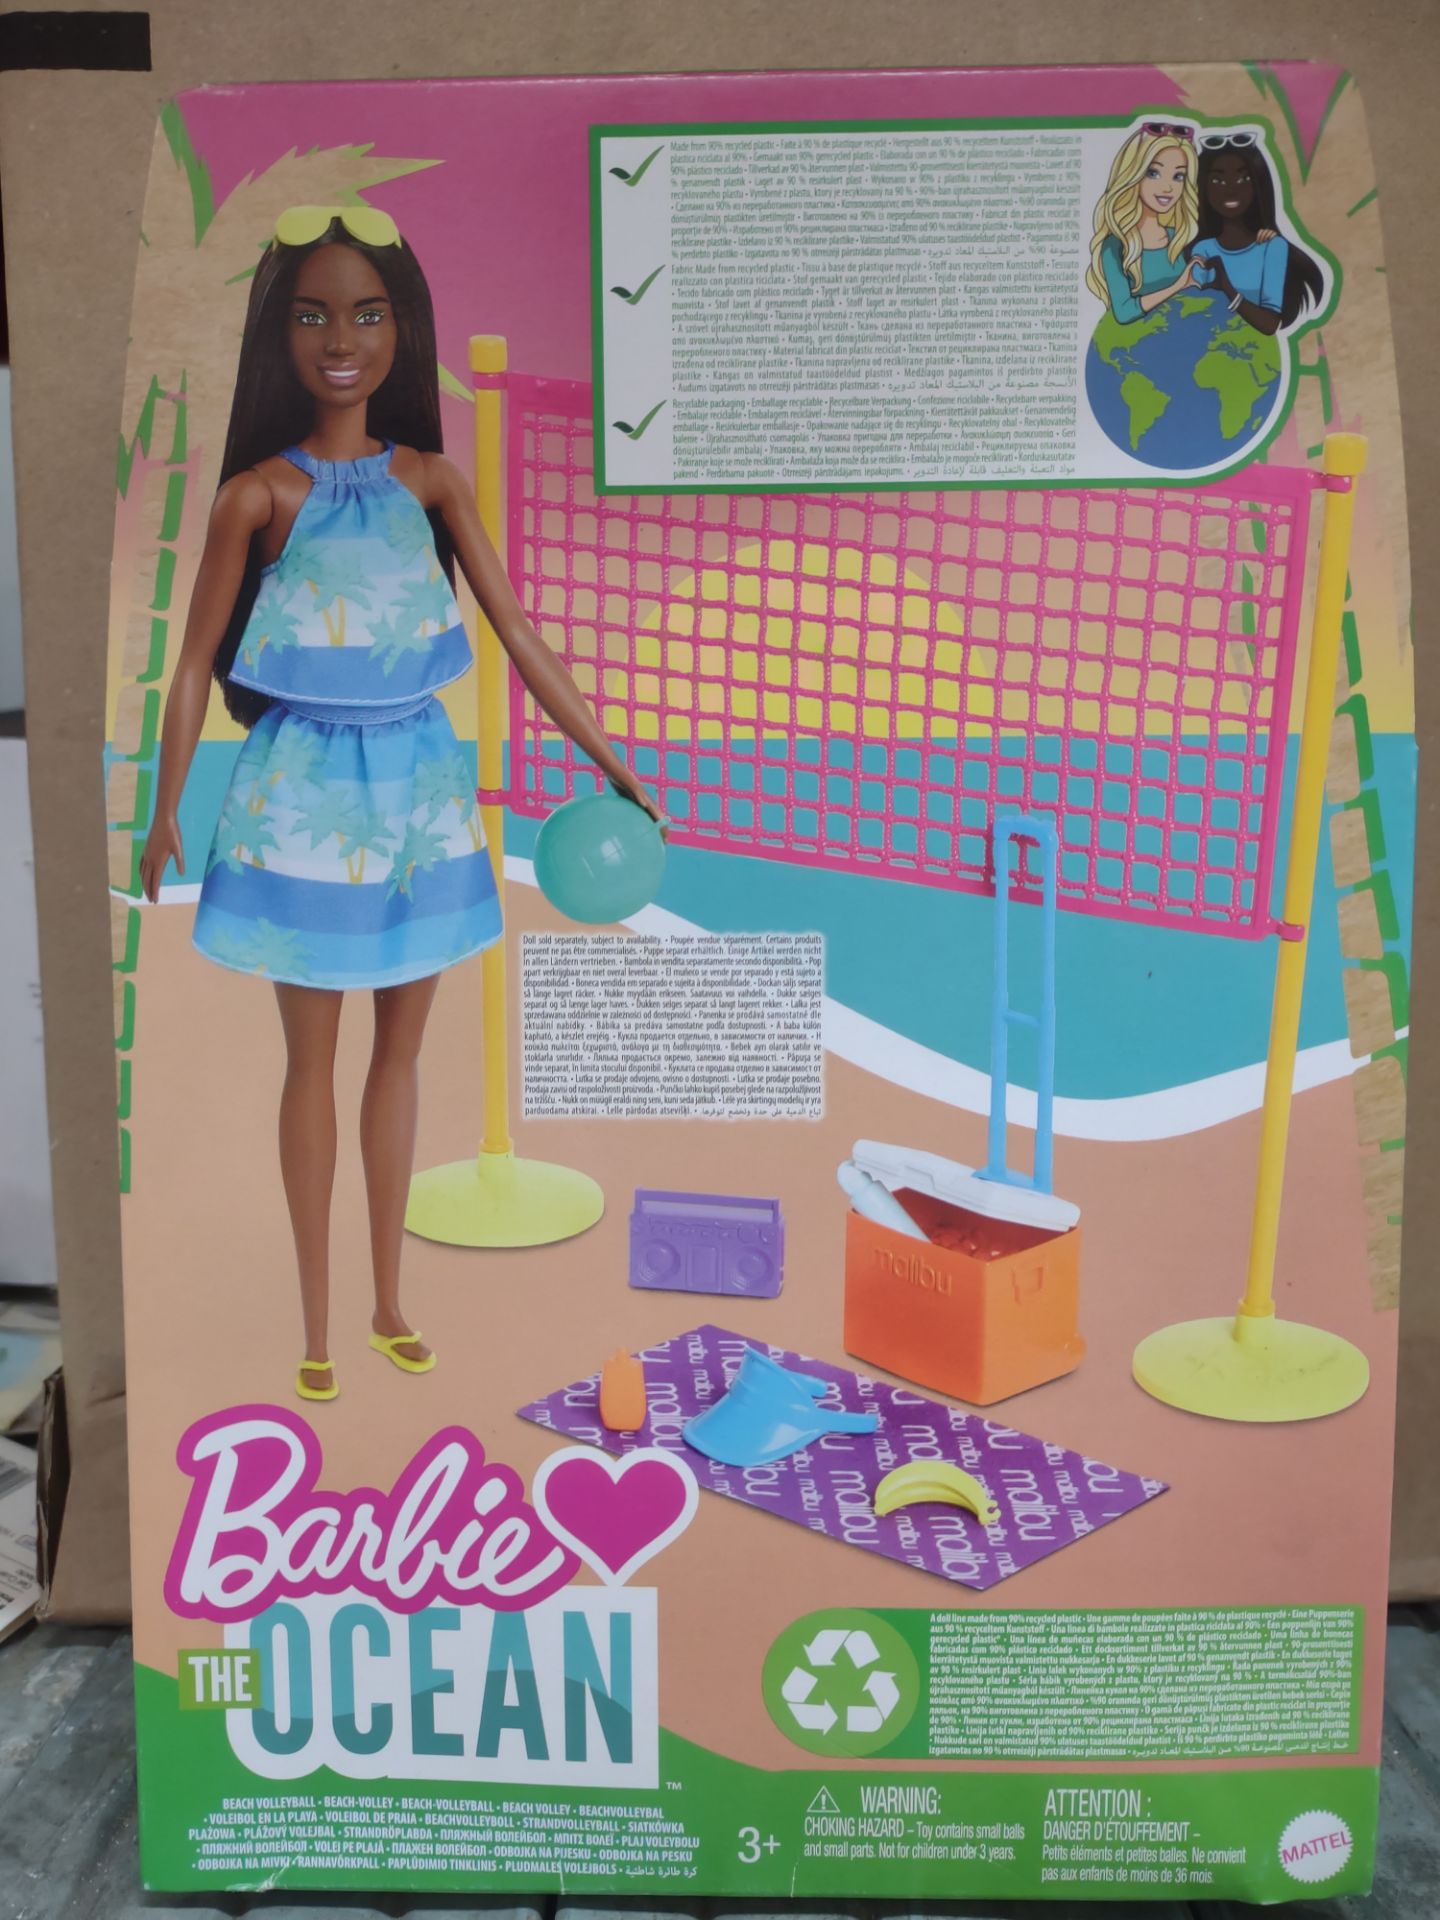 Barbie Malibu Beach Starter Playset Volleyball GYG18 The Ocean. RRP £20 - Grade A